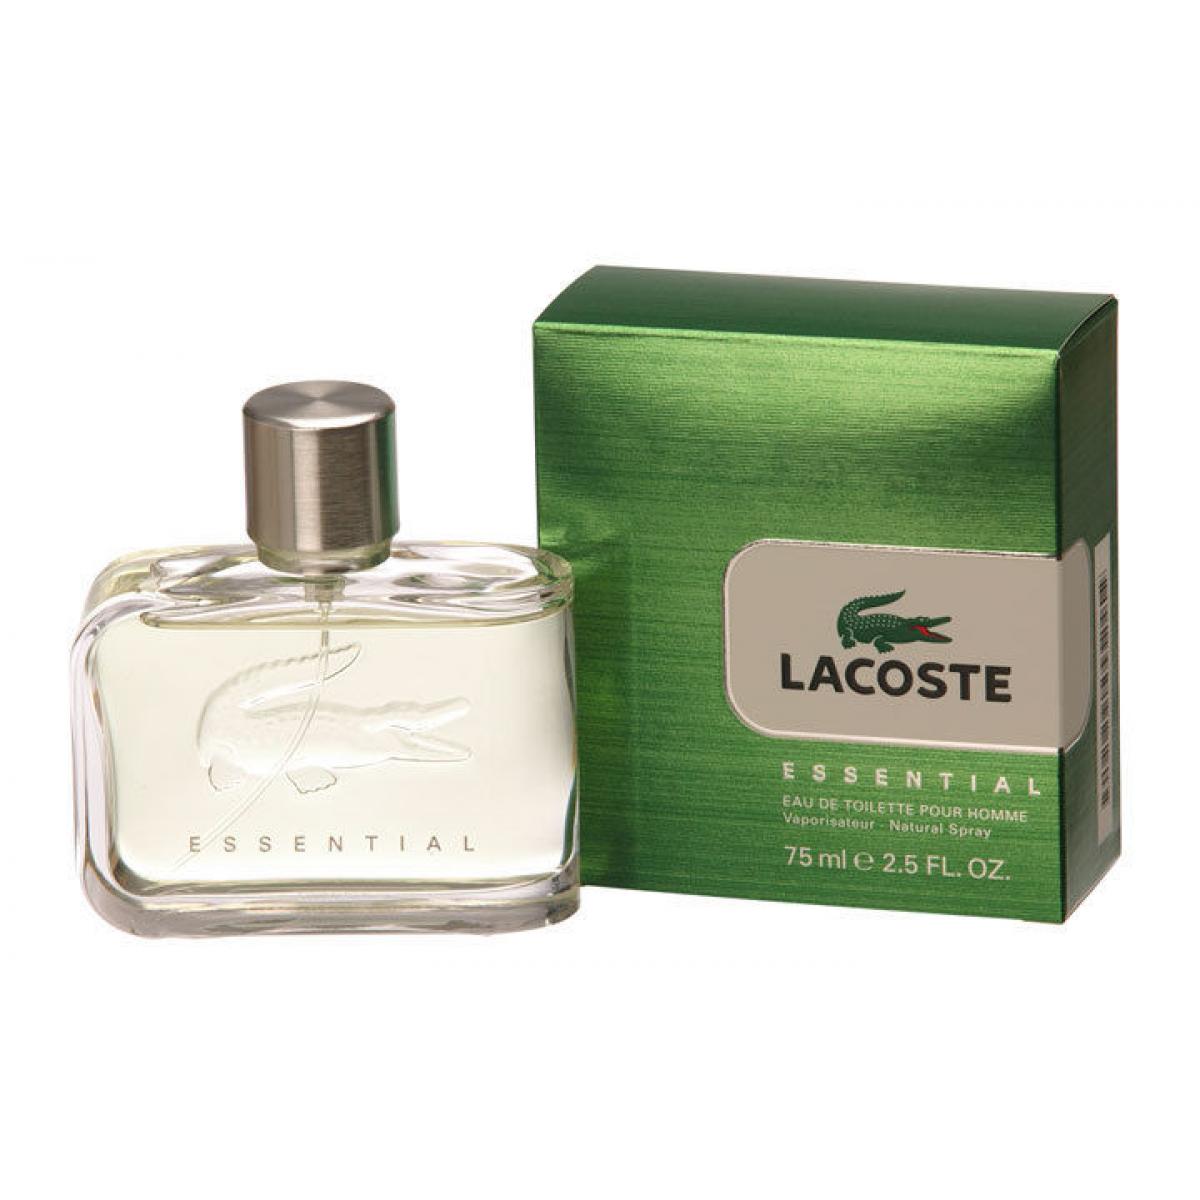 Лакост вода для мужчин. Lacoste Essential EDT, 125 ml. Lacoste Essential Eau de Toilette 125 ml. Lacoste Essential. EDT. Pour homme 125 ml.. Lacoste Essential for men.